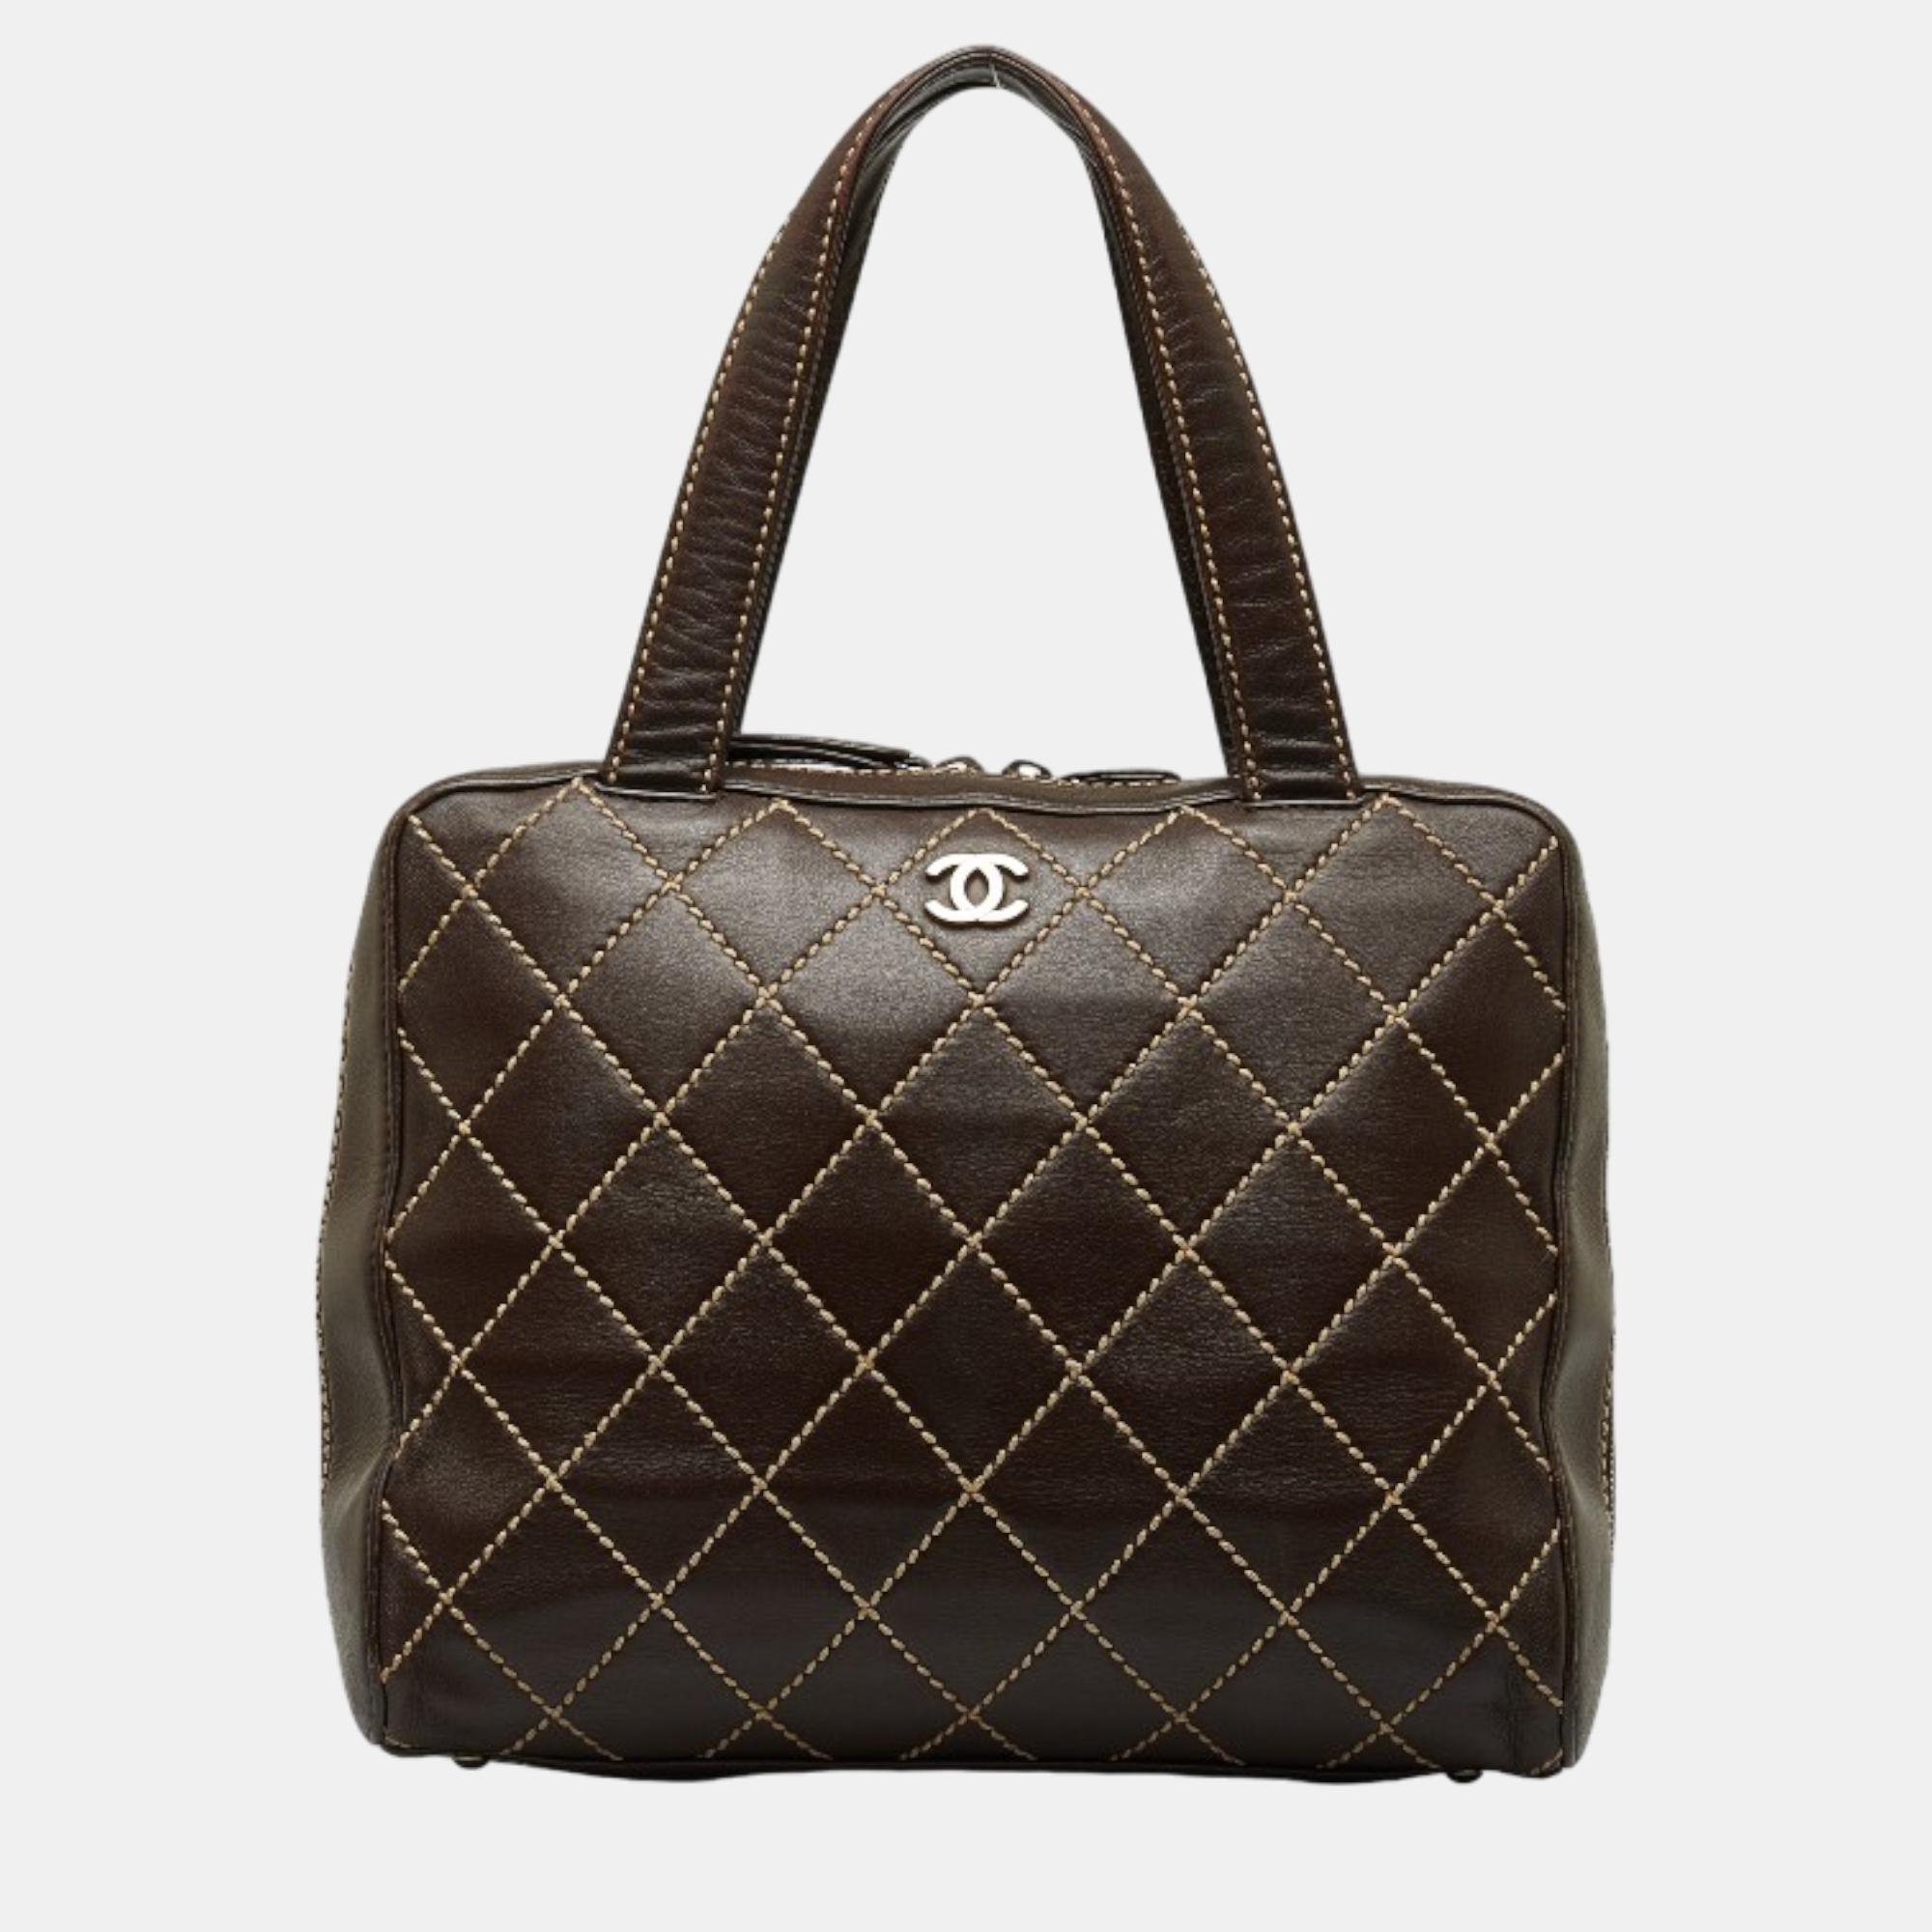 Chanel brown leather wild stitch boston bag